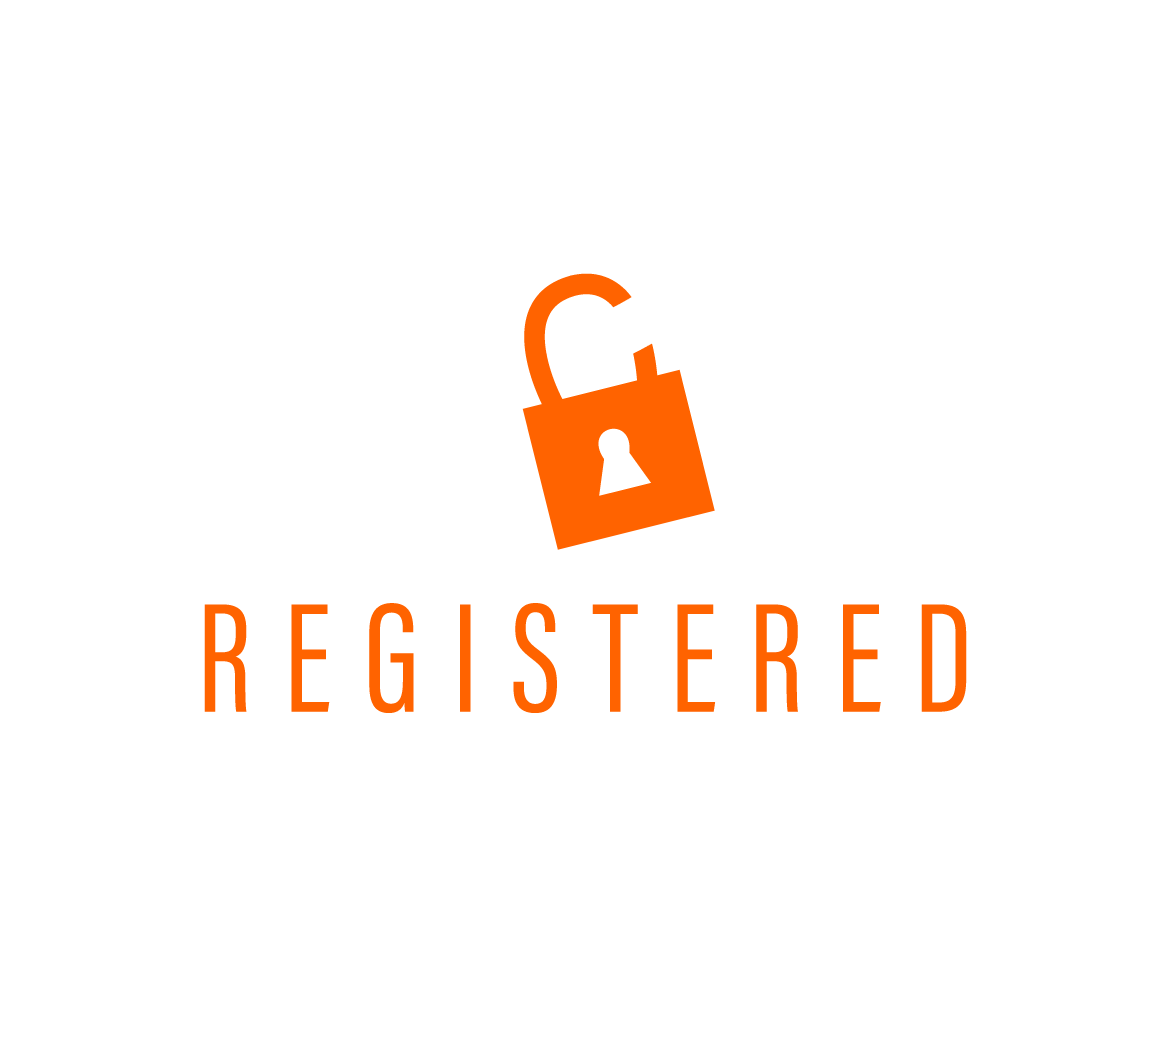 Registered Email